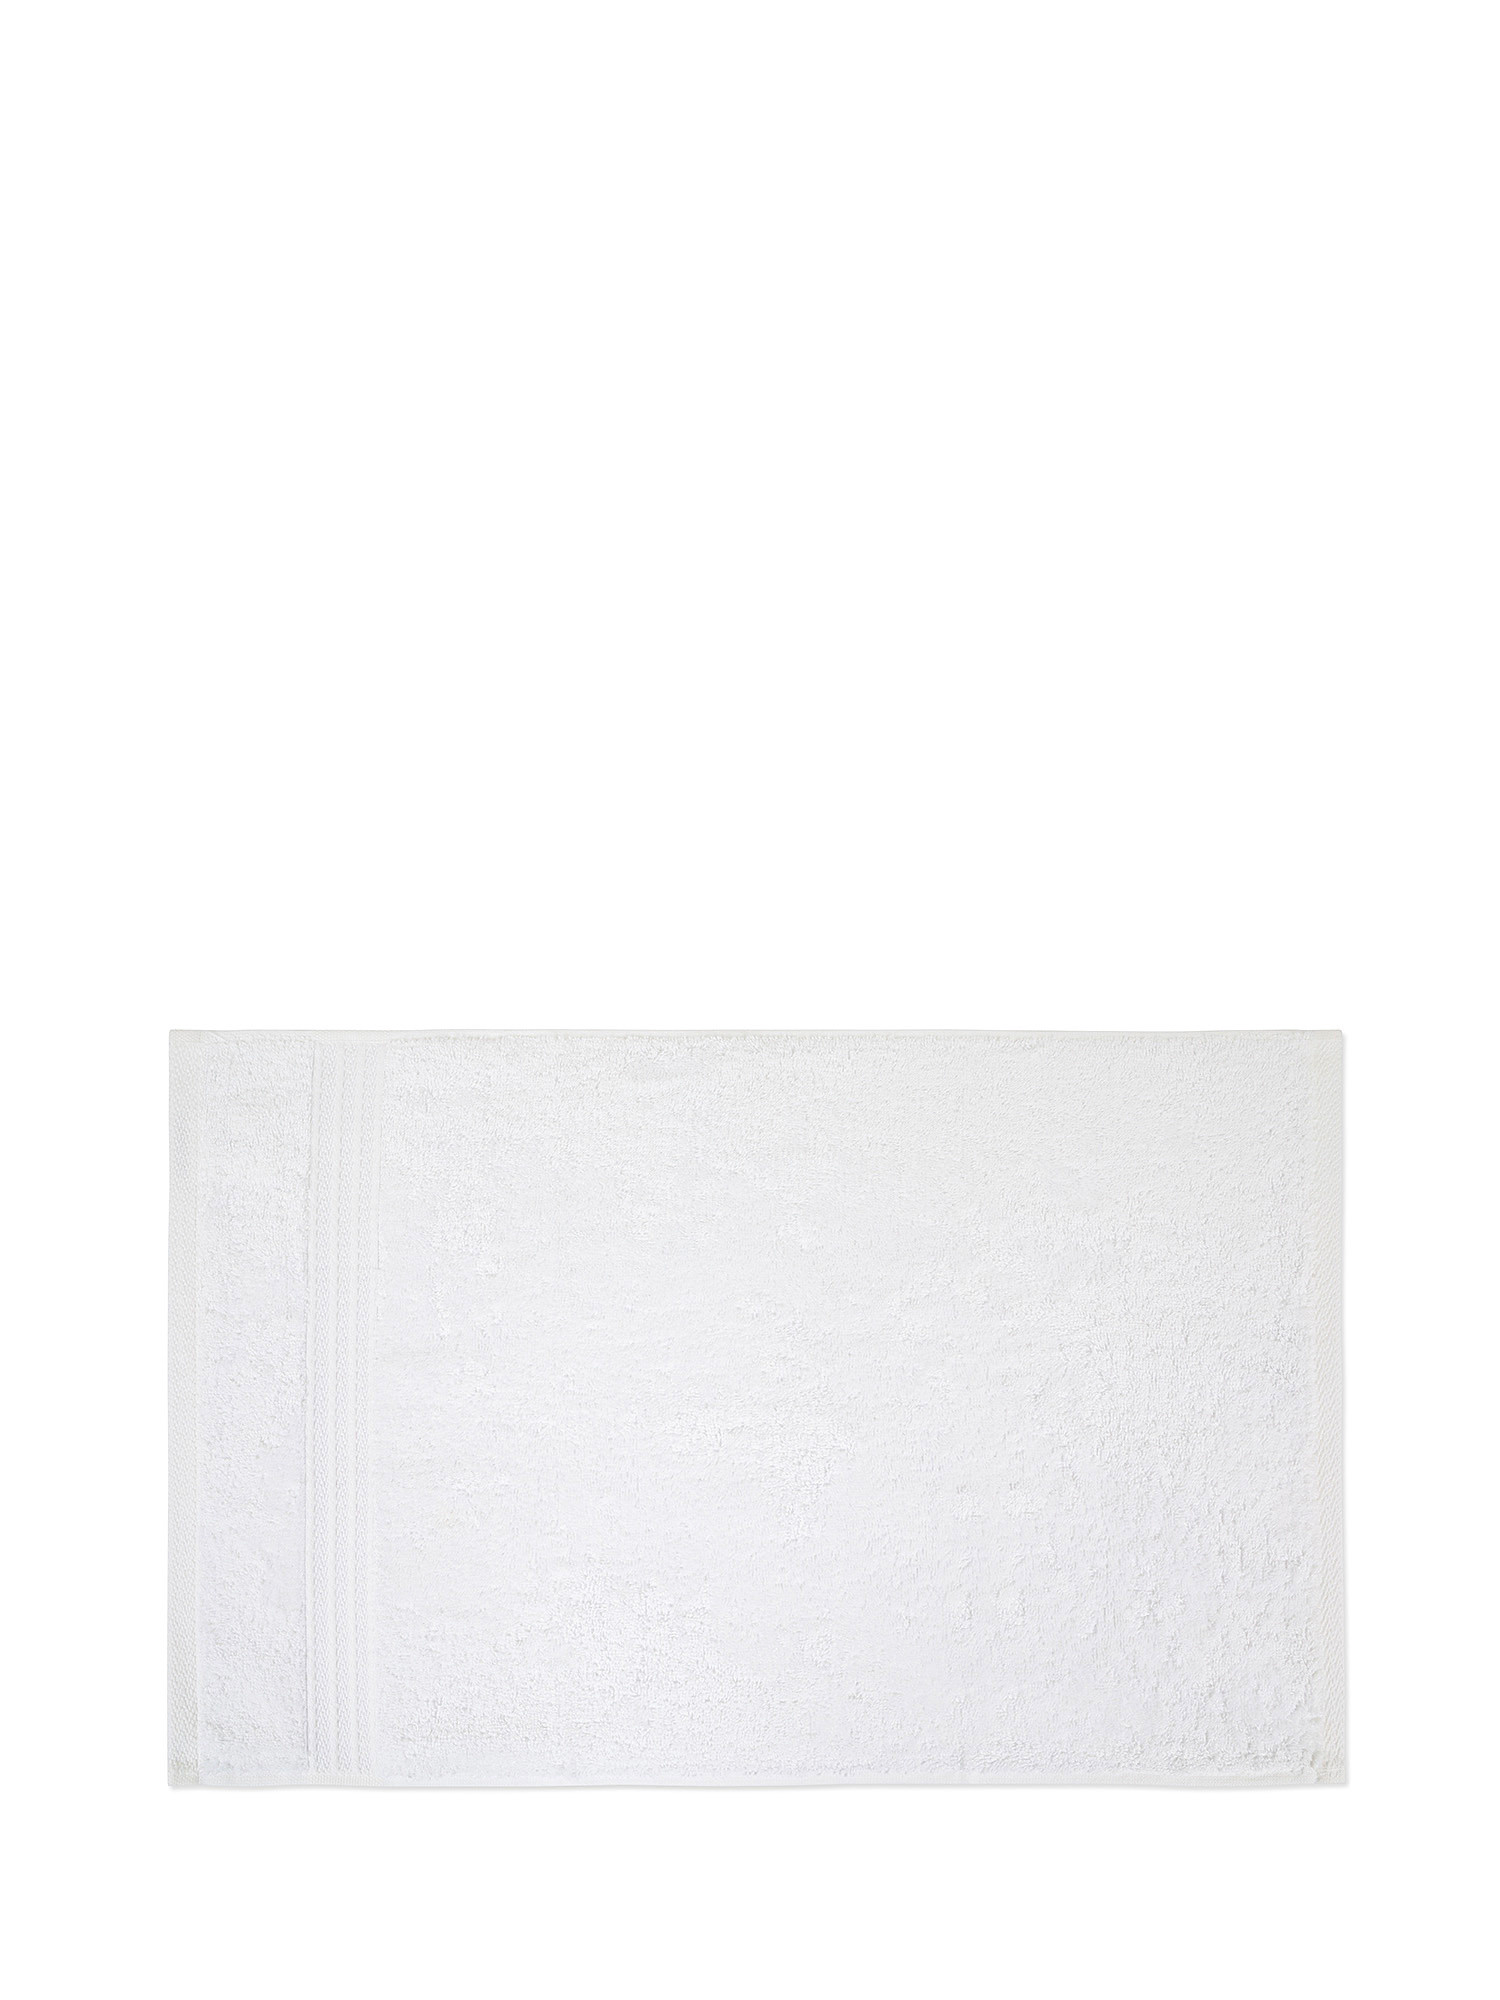 Asciugamano puro cotone tinta unita Zefiro, Bianco, large image number 1